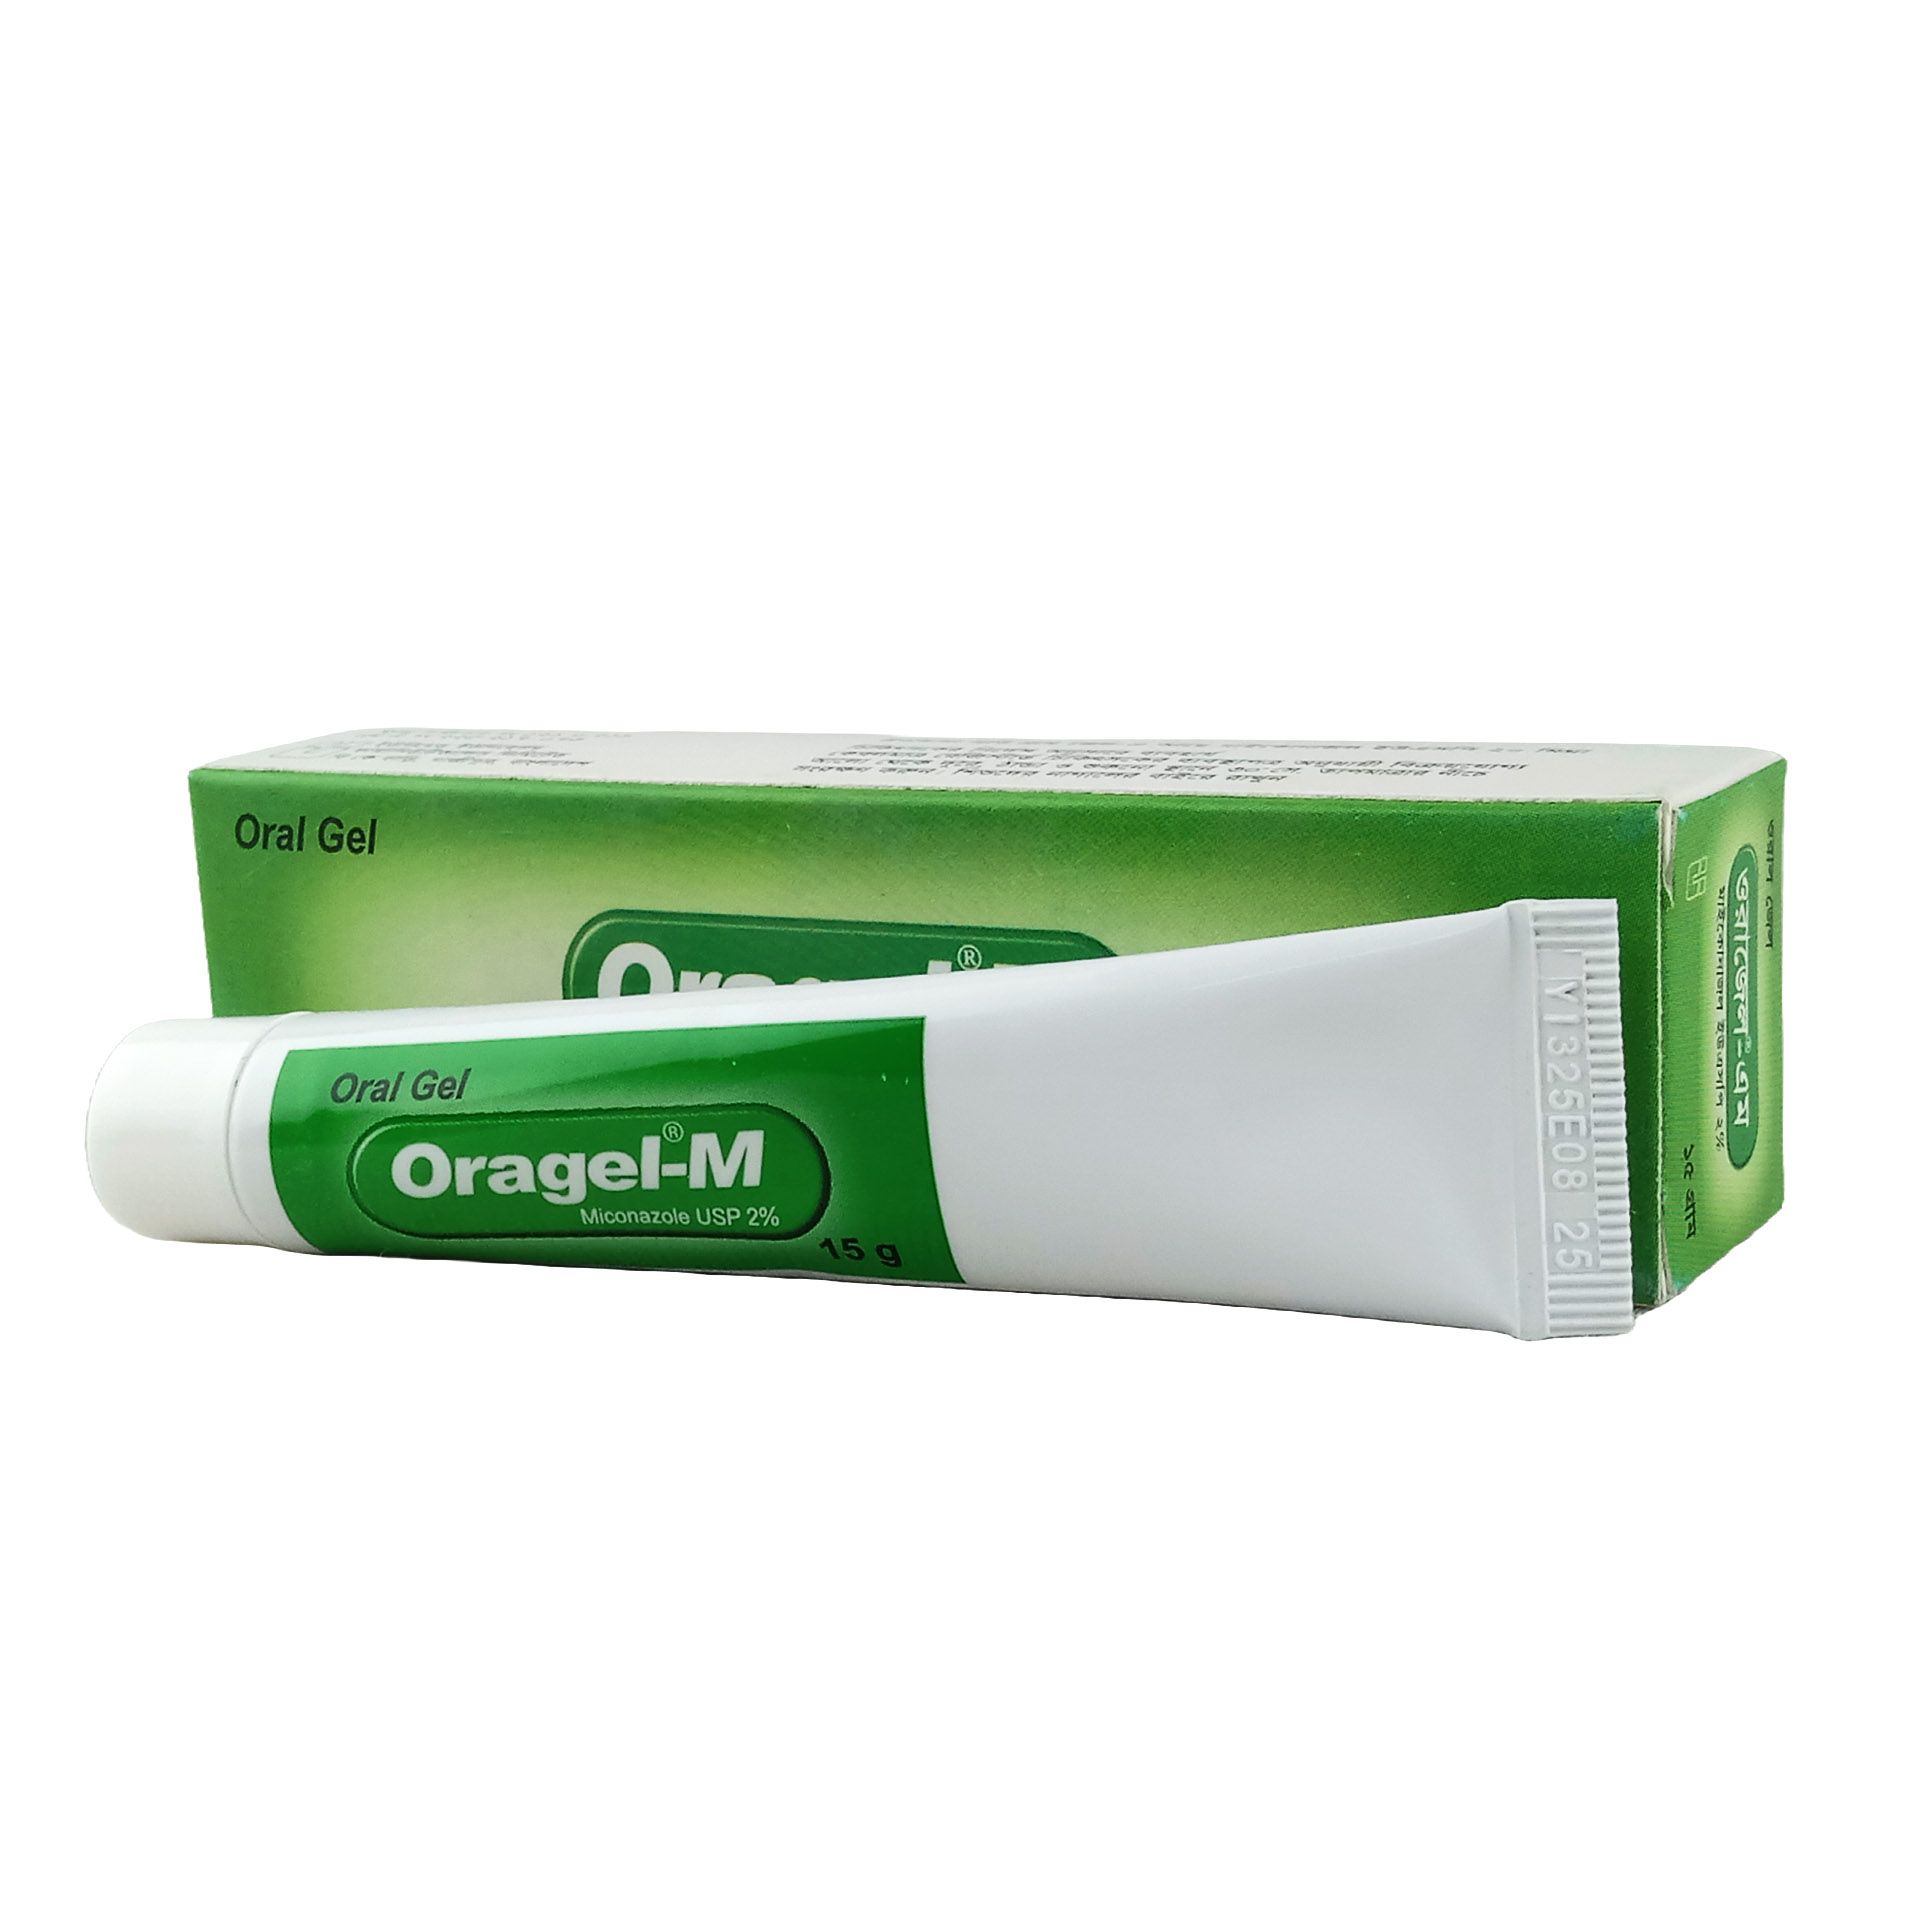 Oragel-M 2% Oral Gel